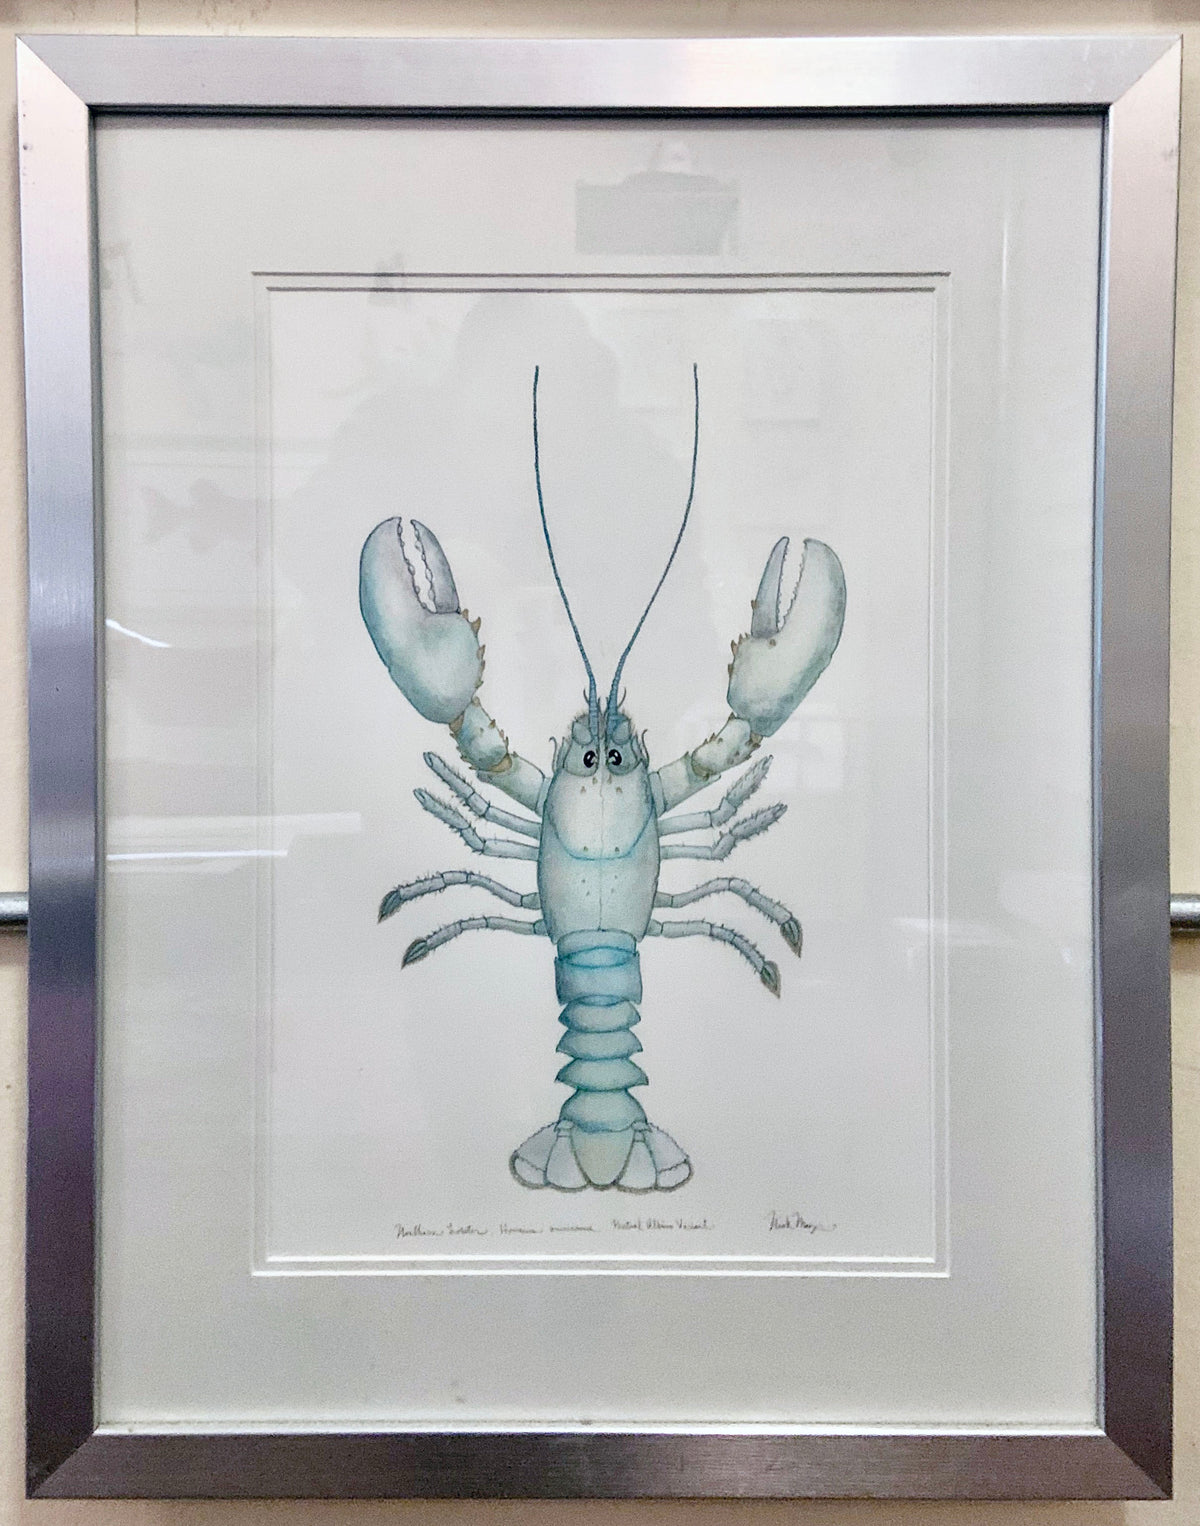 Albino Lobster Original Painting